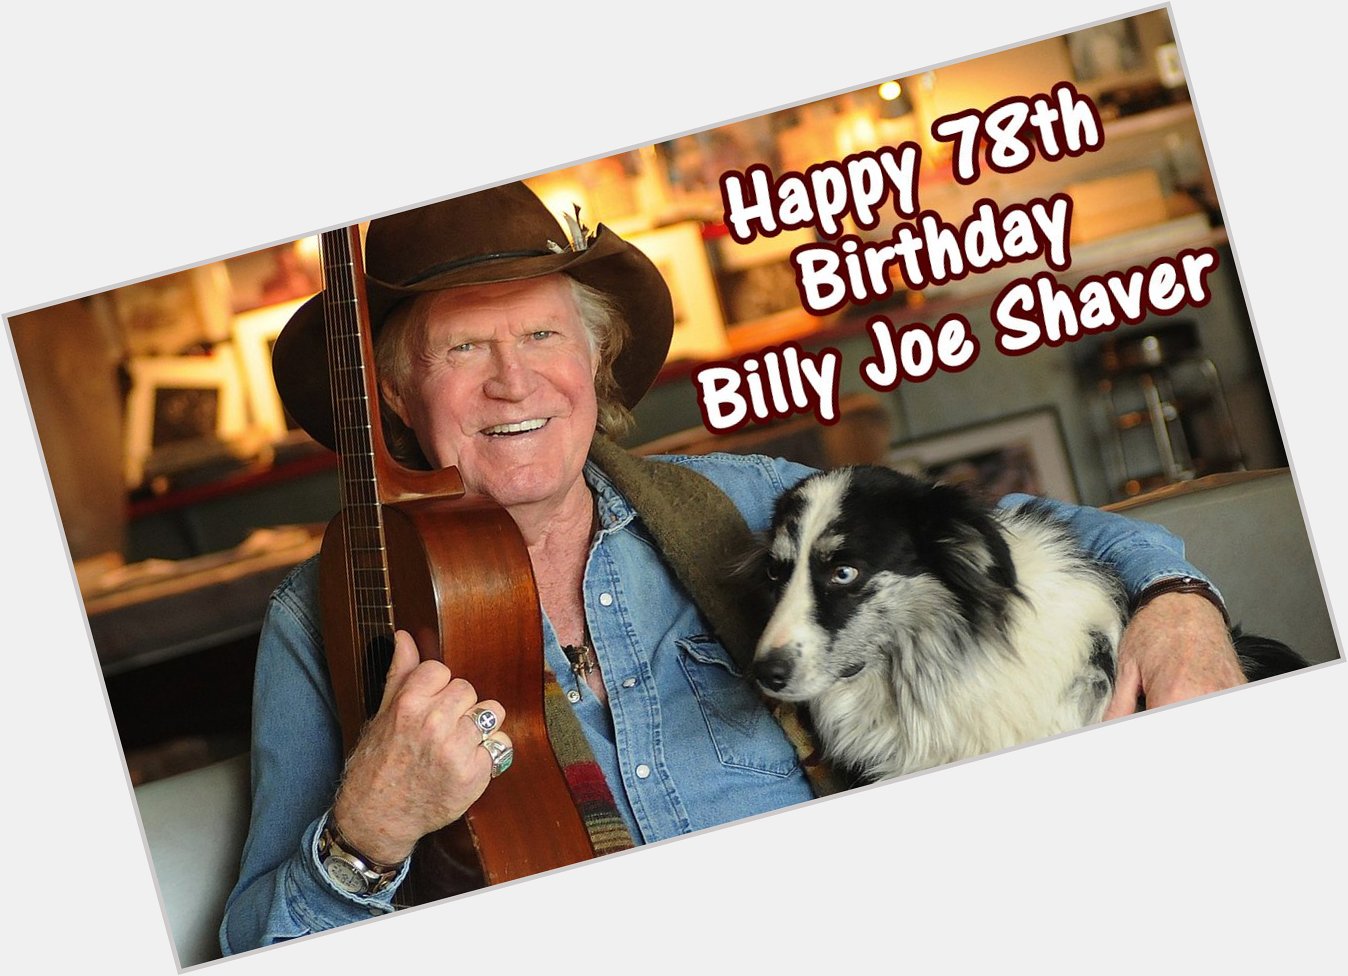 Big happy birthday to a true Texas outlaw, Billy Joe Shaver! 